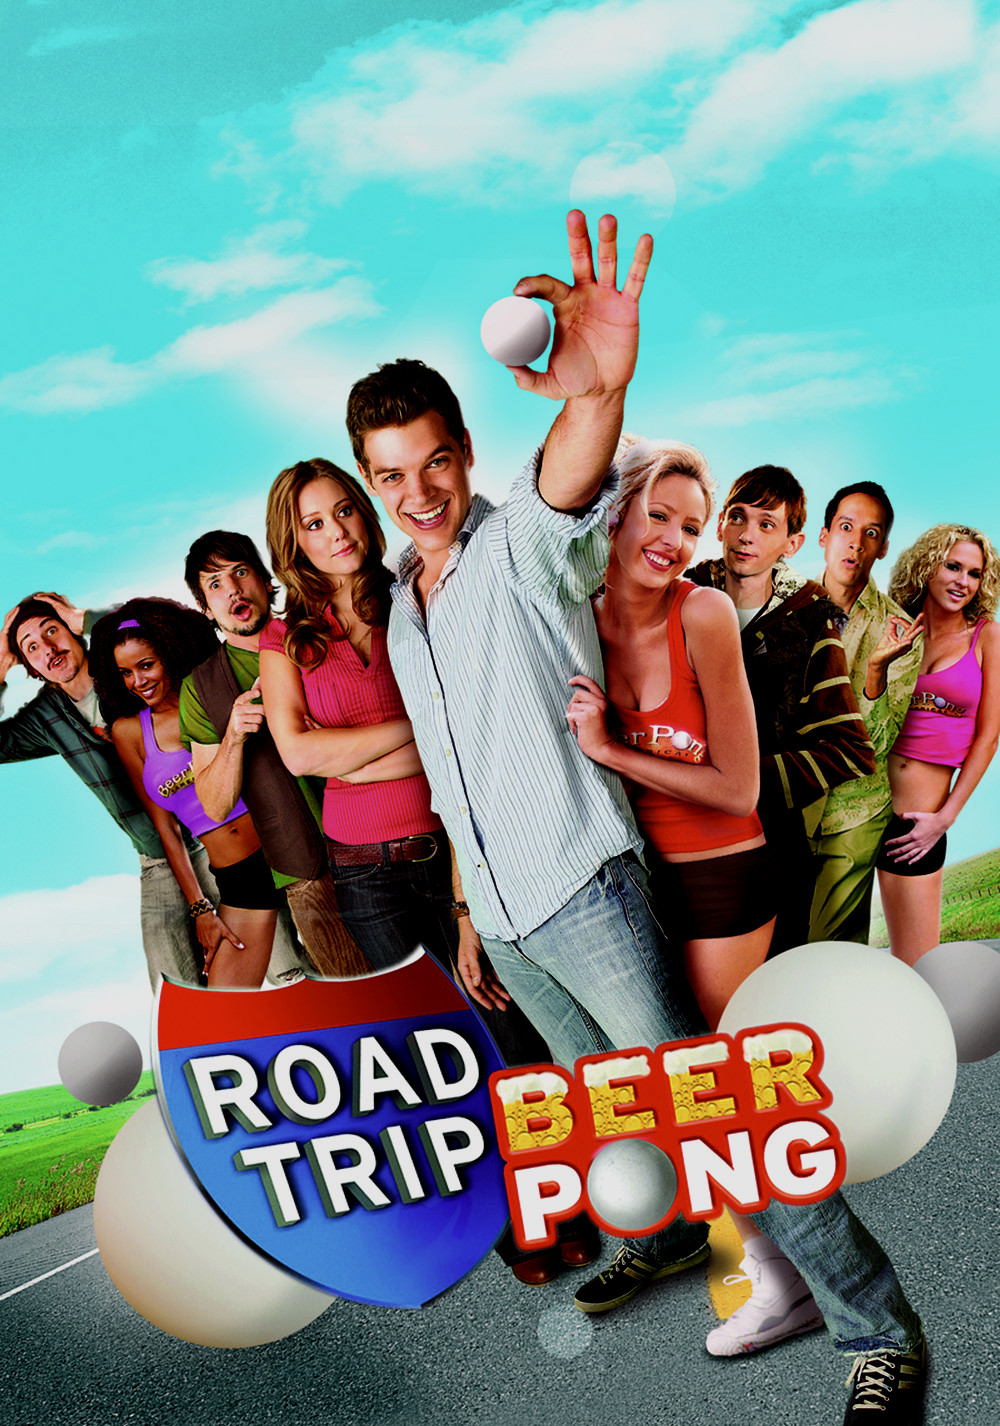 road trip beer pong reparto